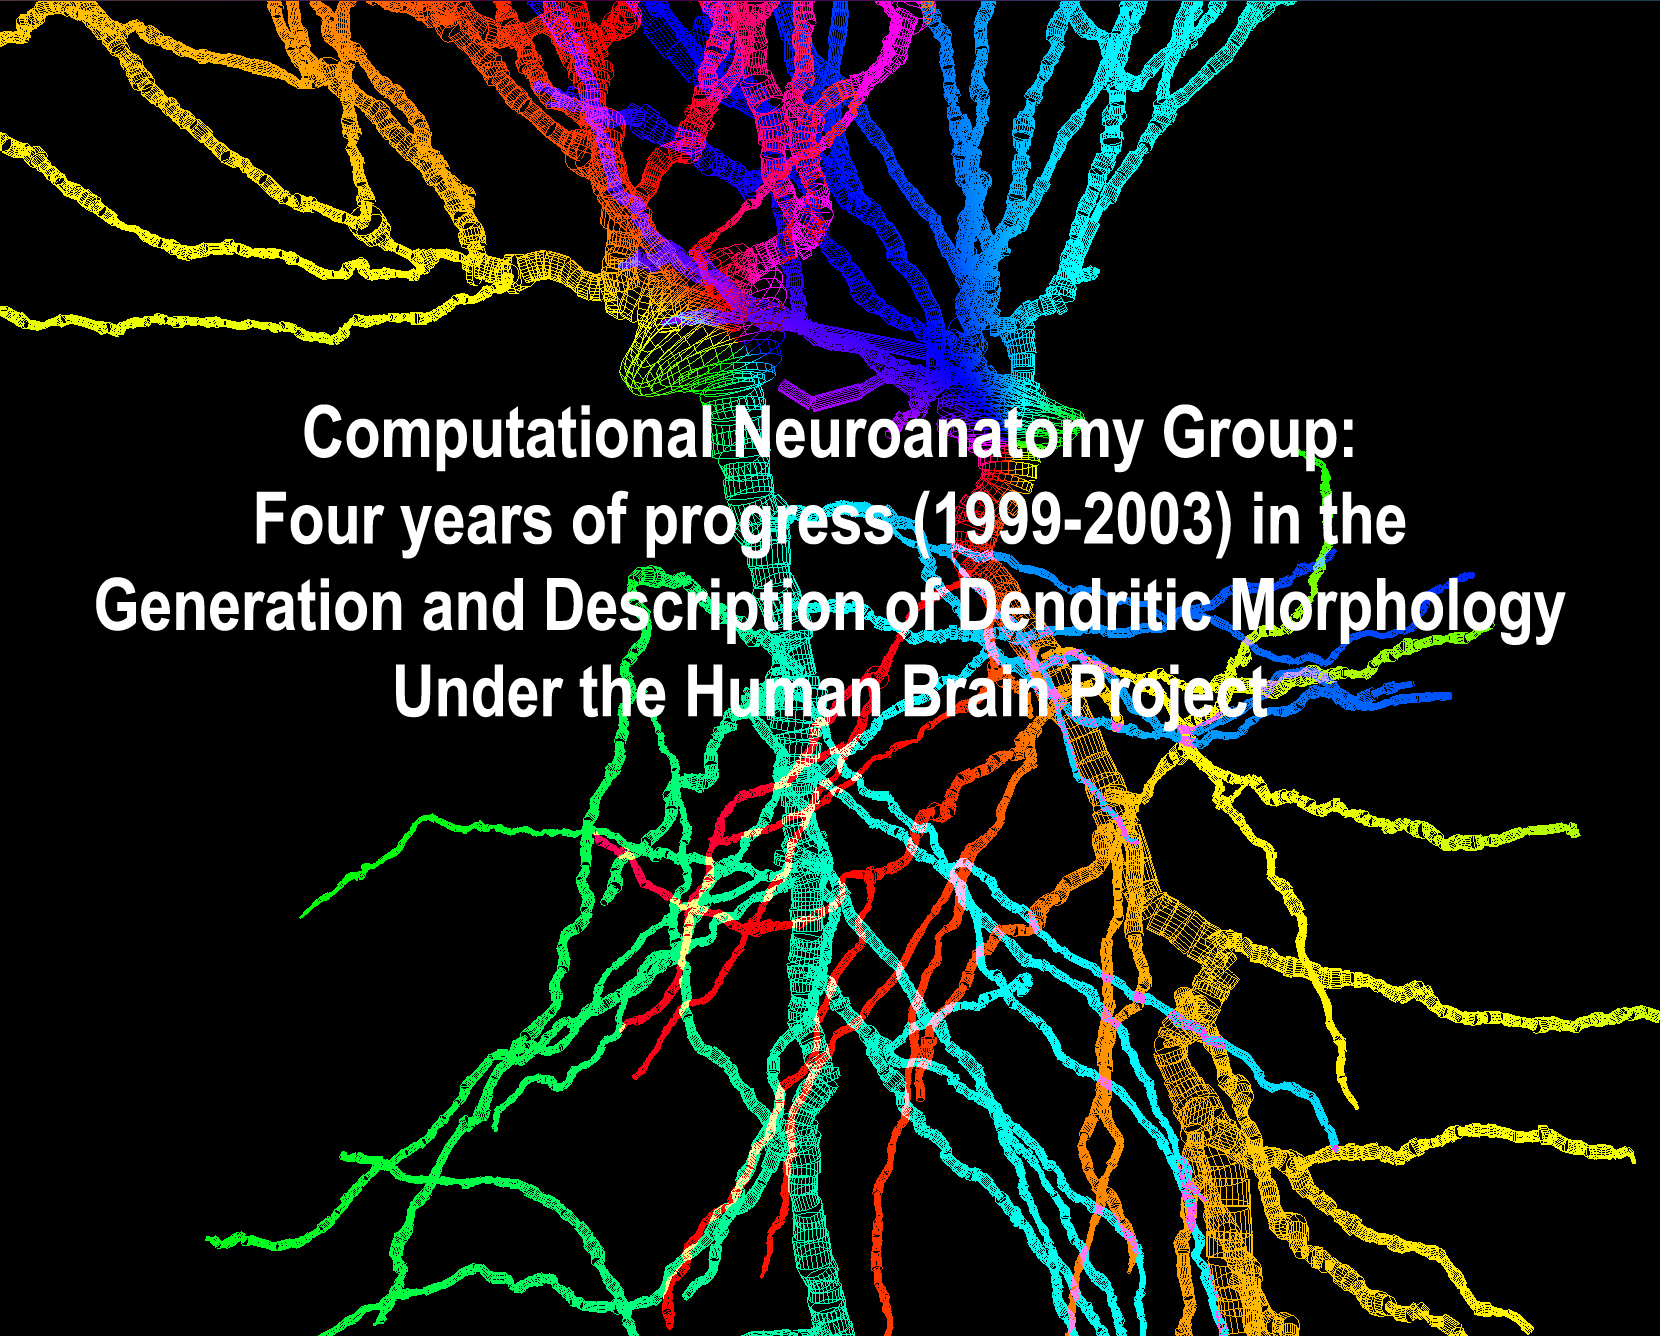 Computational Neuroanatomy Group: Generation and Description of Dendritic Morphology